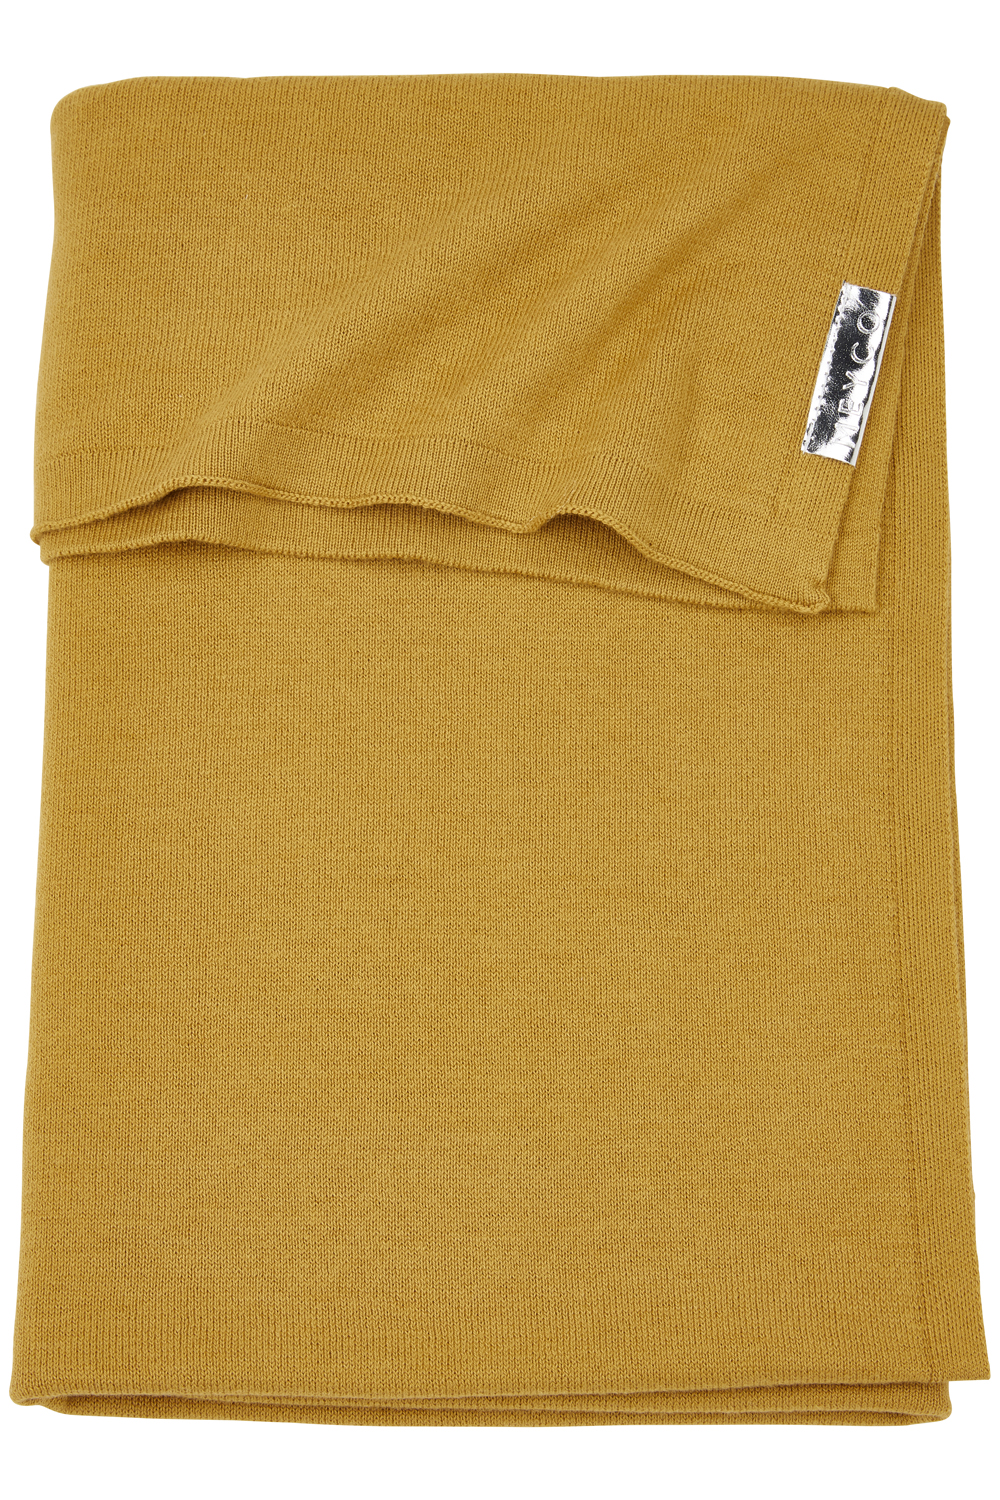 Crib bed blanket Knit Basic - honey gold - 75x100cm